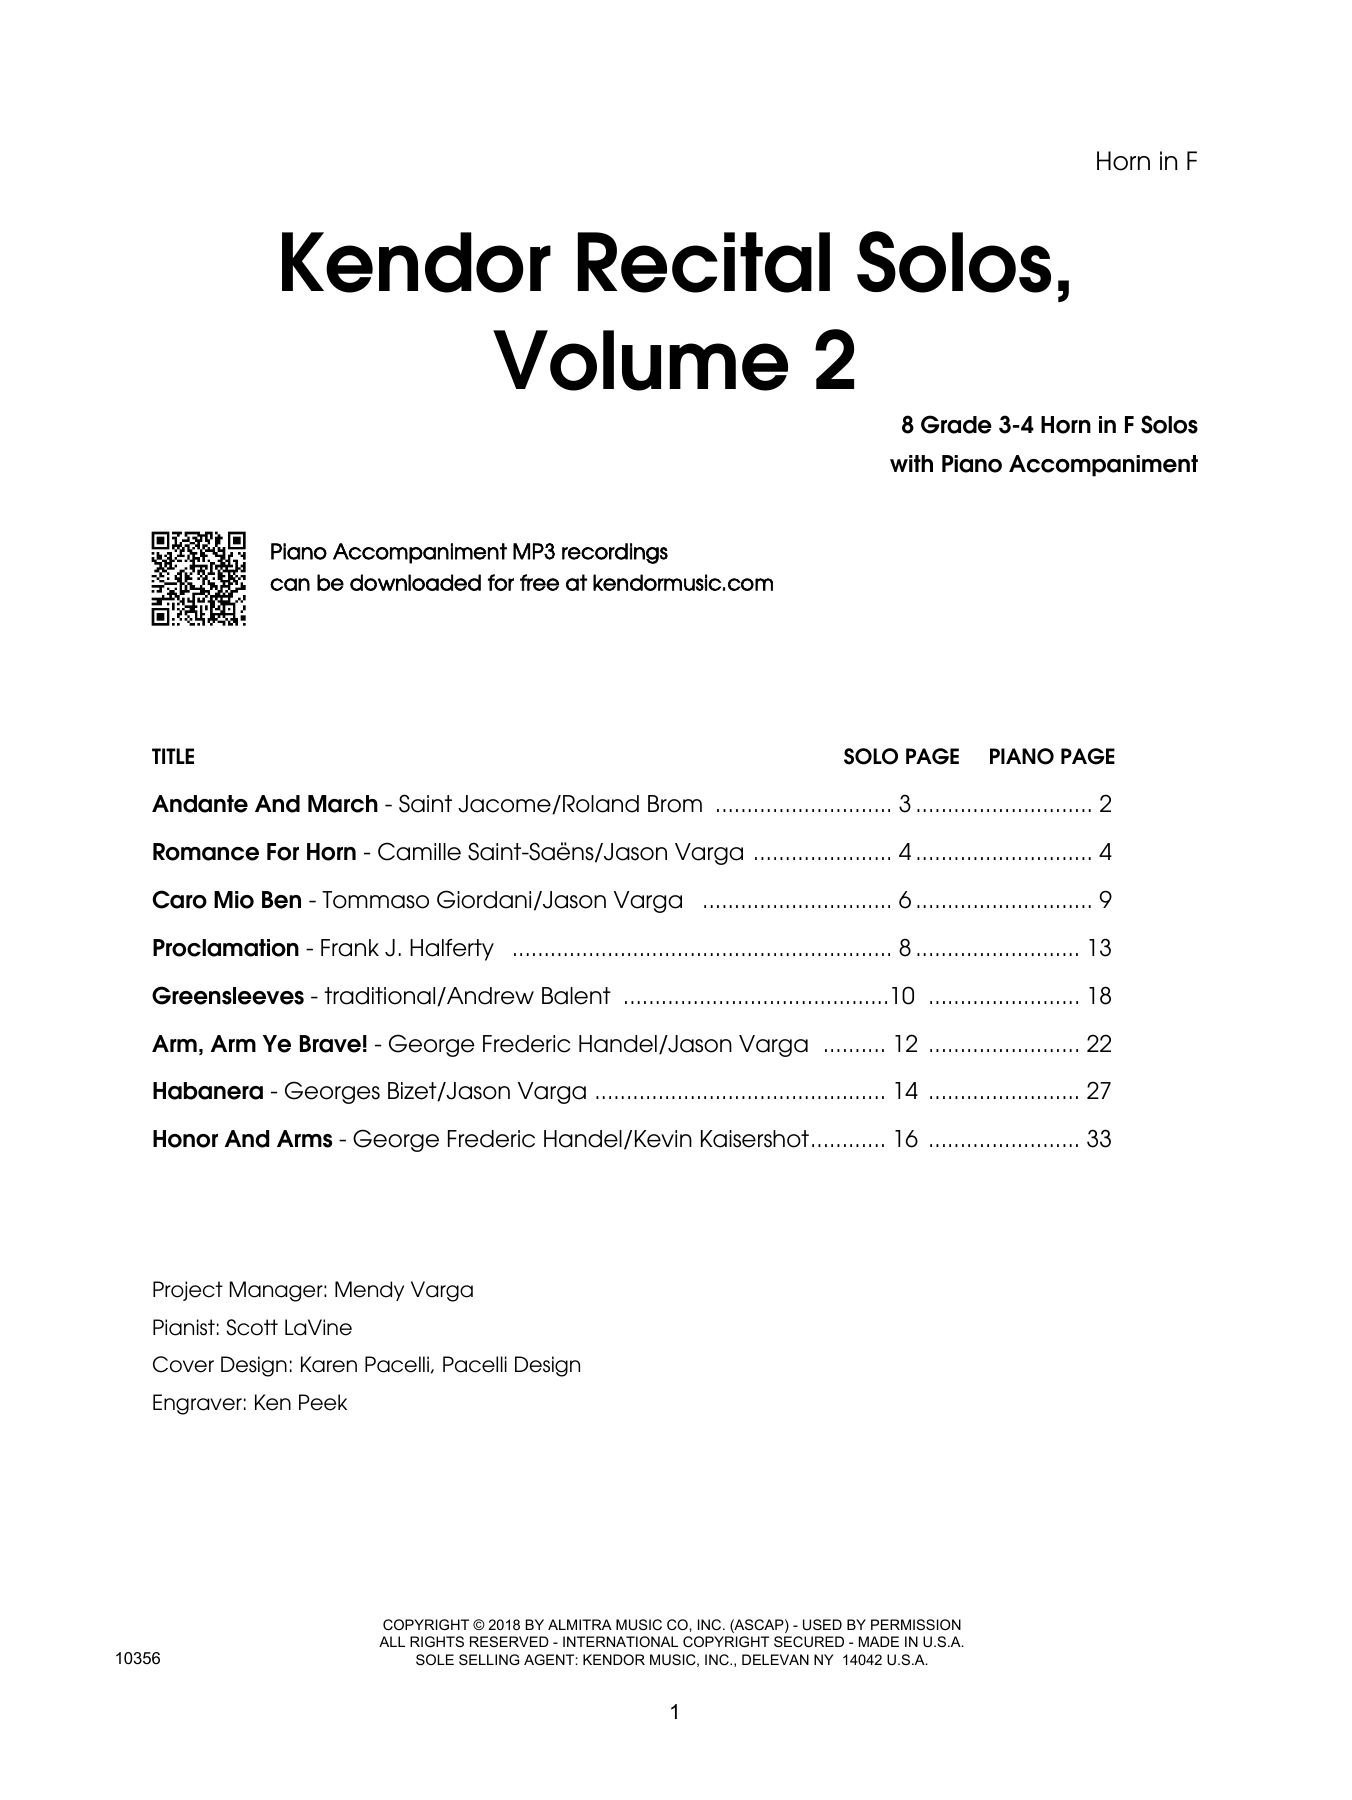 Kendor Recital Solos, Volume 2 - Horn in F (Brass Solo) von Various